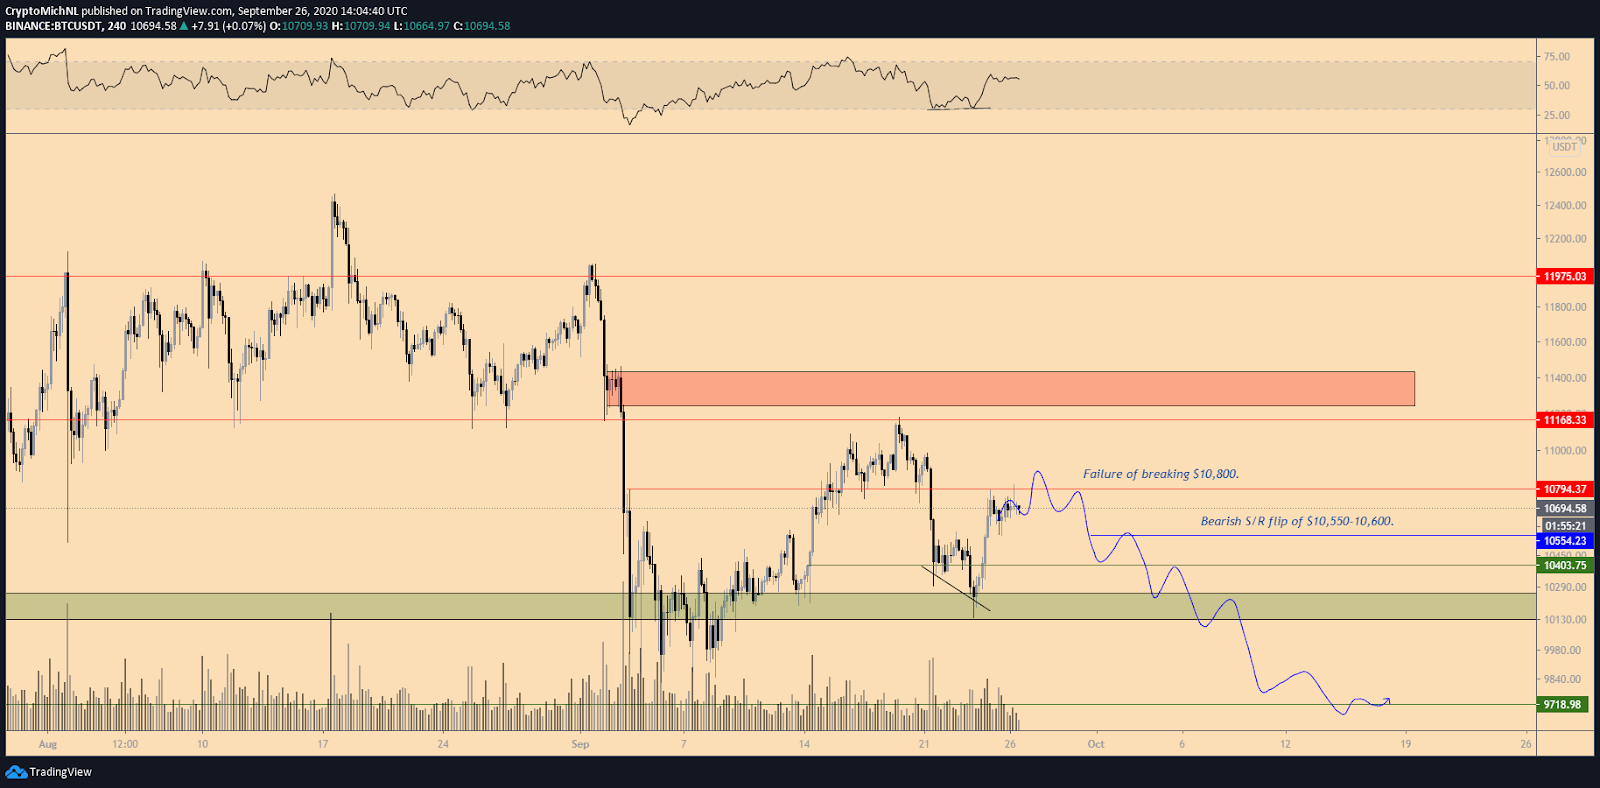 BTC/USD 4-hour chart bearish scenario. Source: TradingView